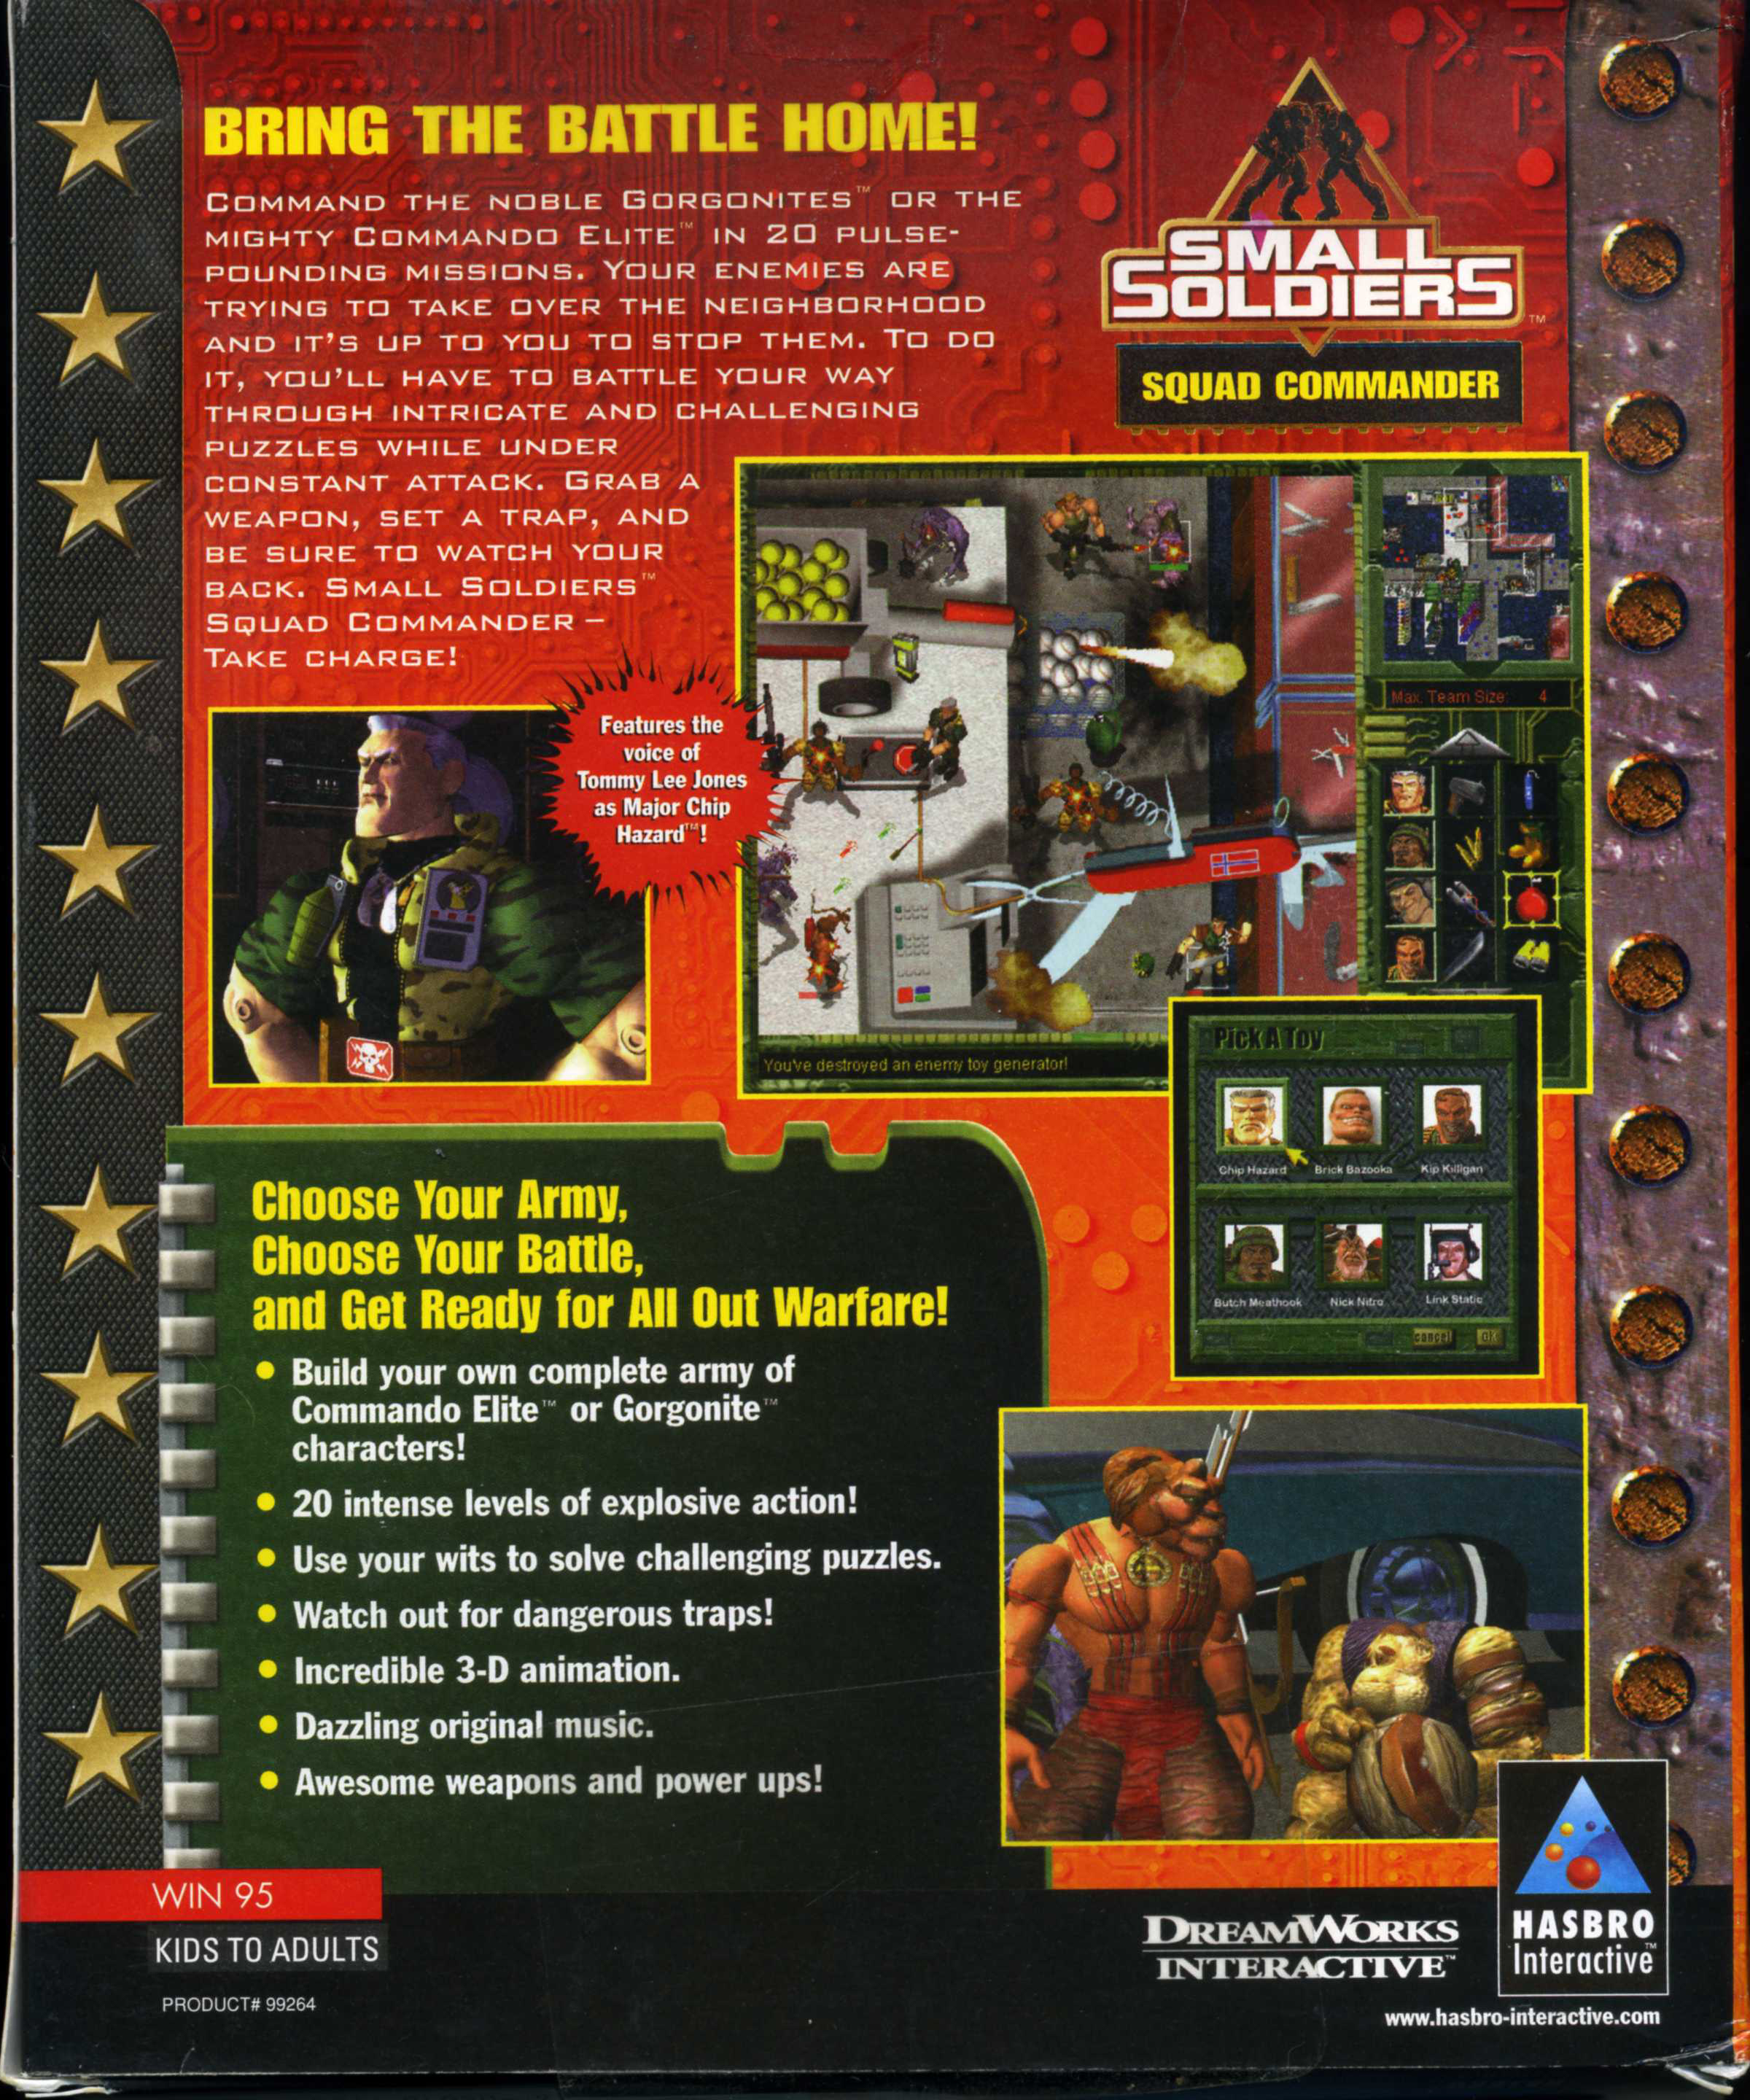 Squad commands. Small Soldiers: Squad Commander [1998]. Small Soldiers игра. Солдатики игра на ПК. Сквад игра солдаты.